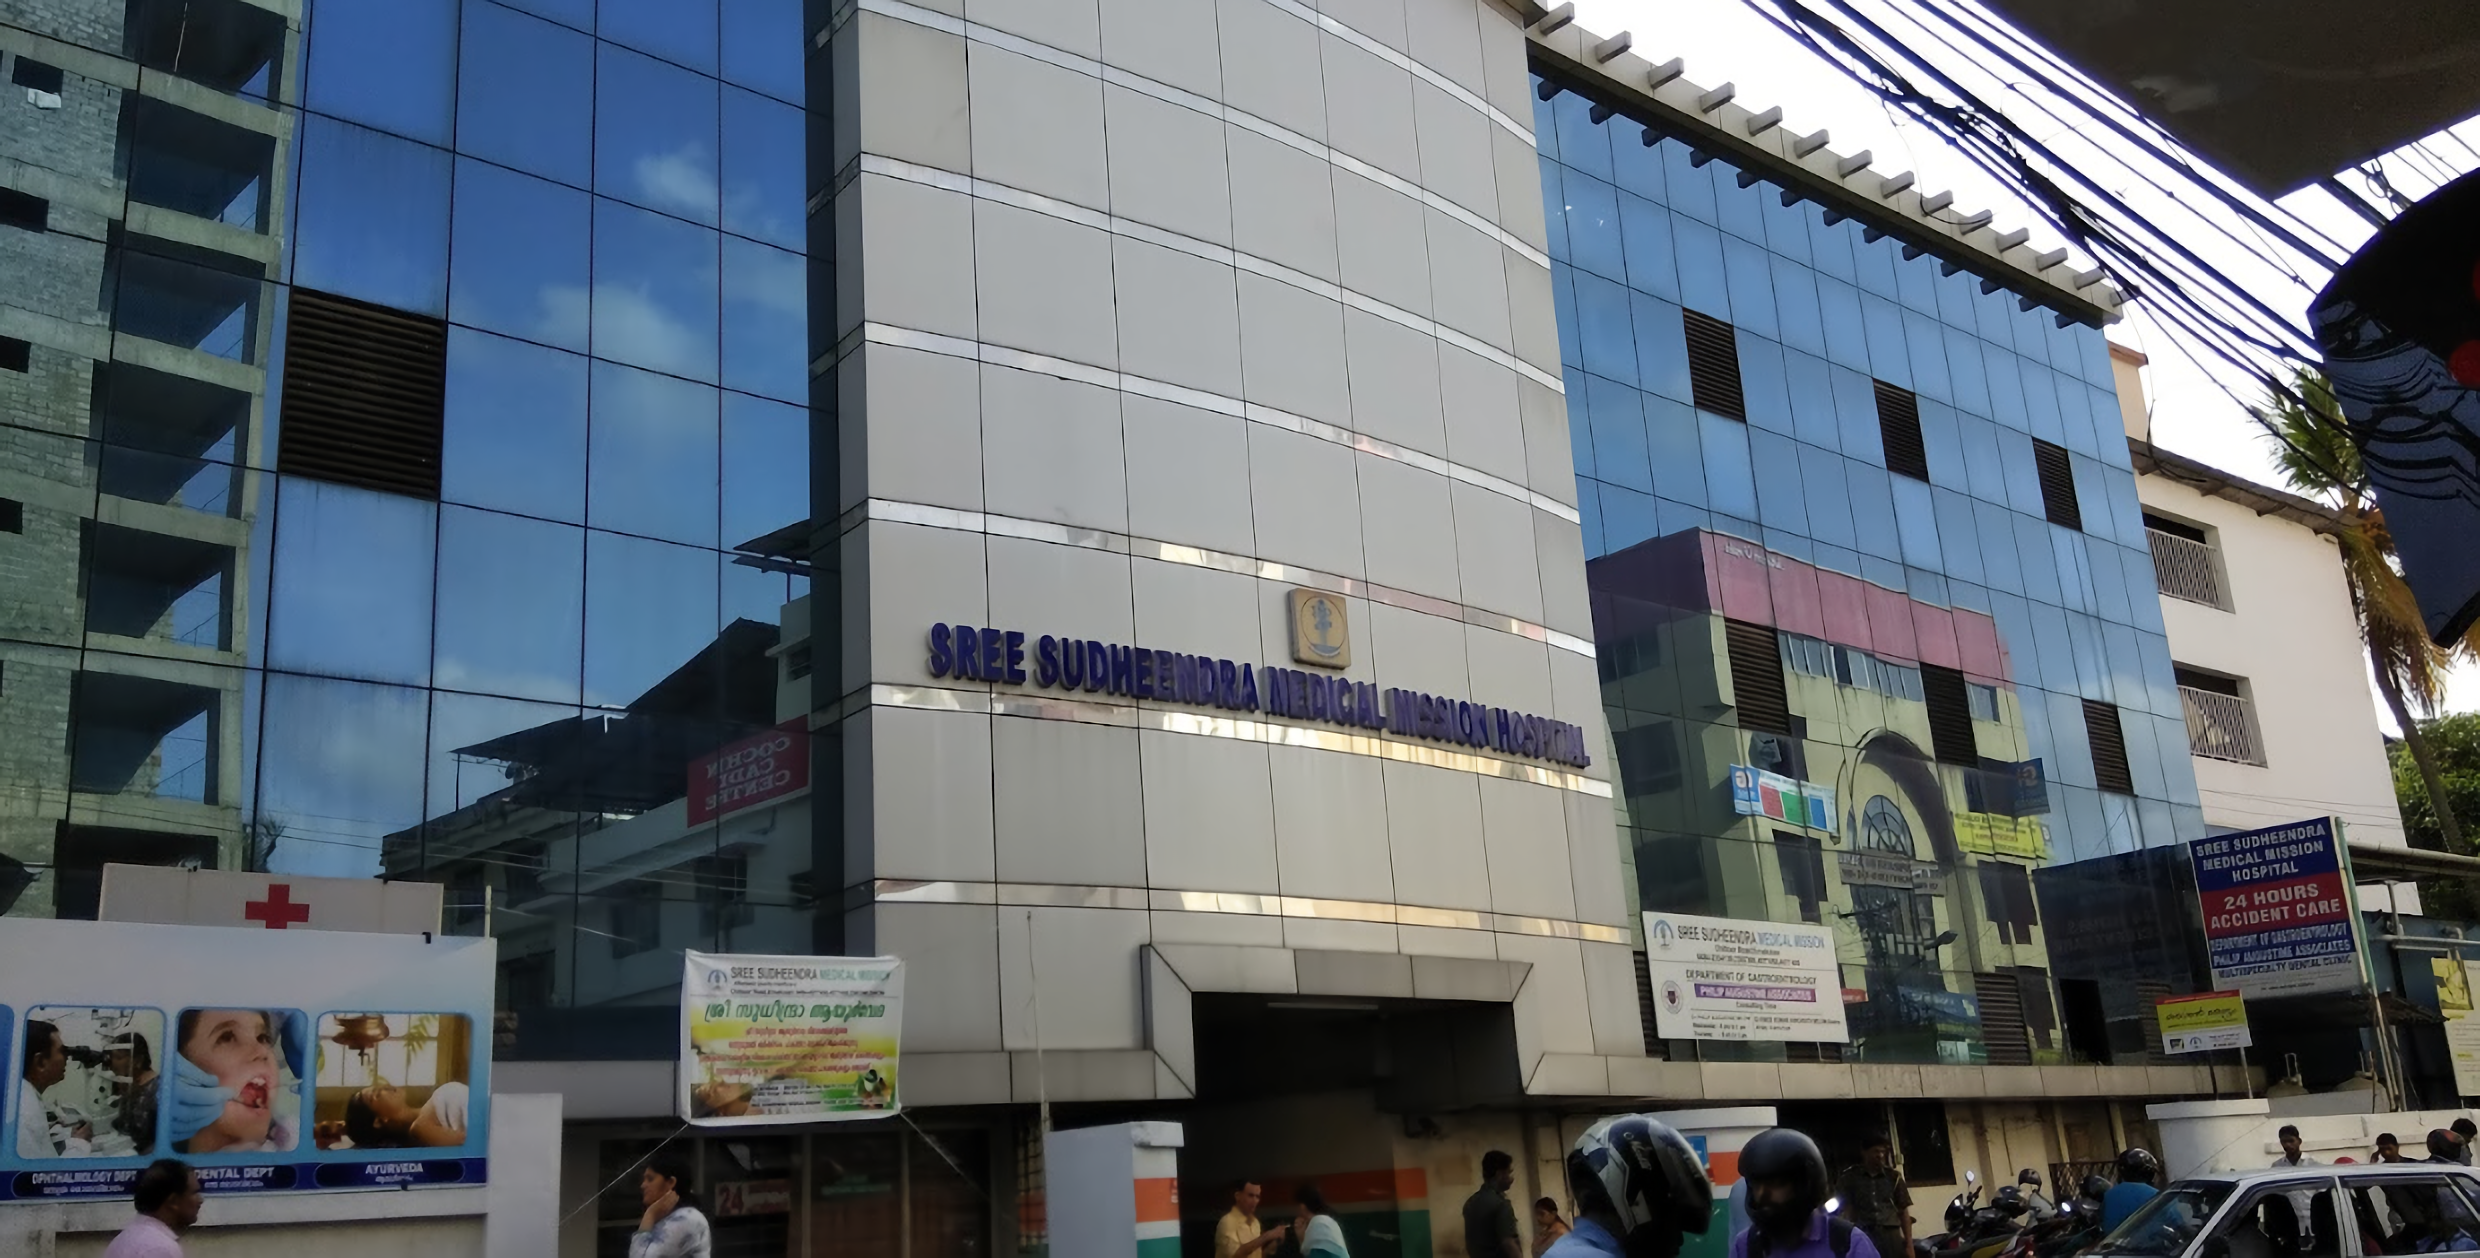 Sree Sudheendra Medical Mission Hospital